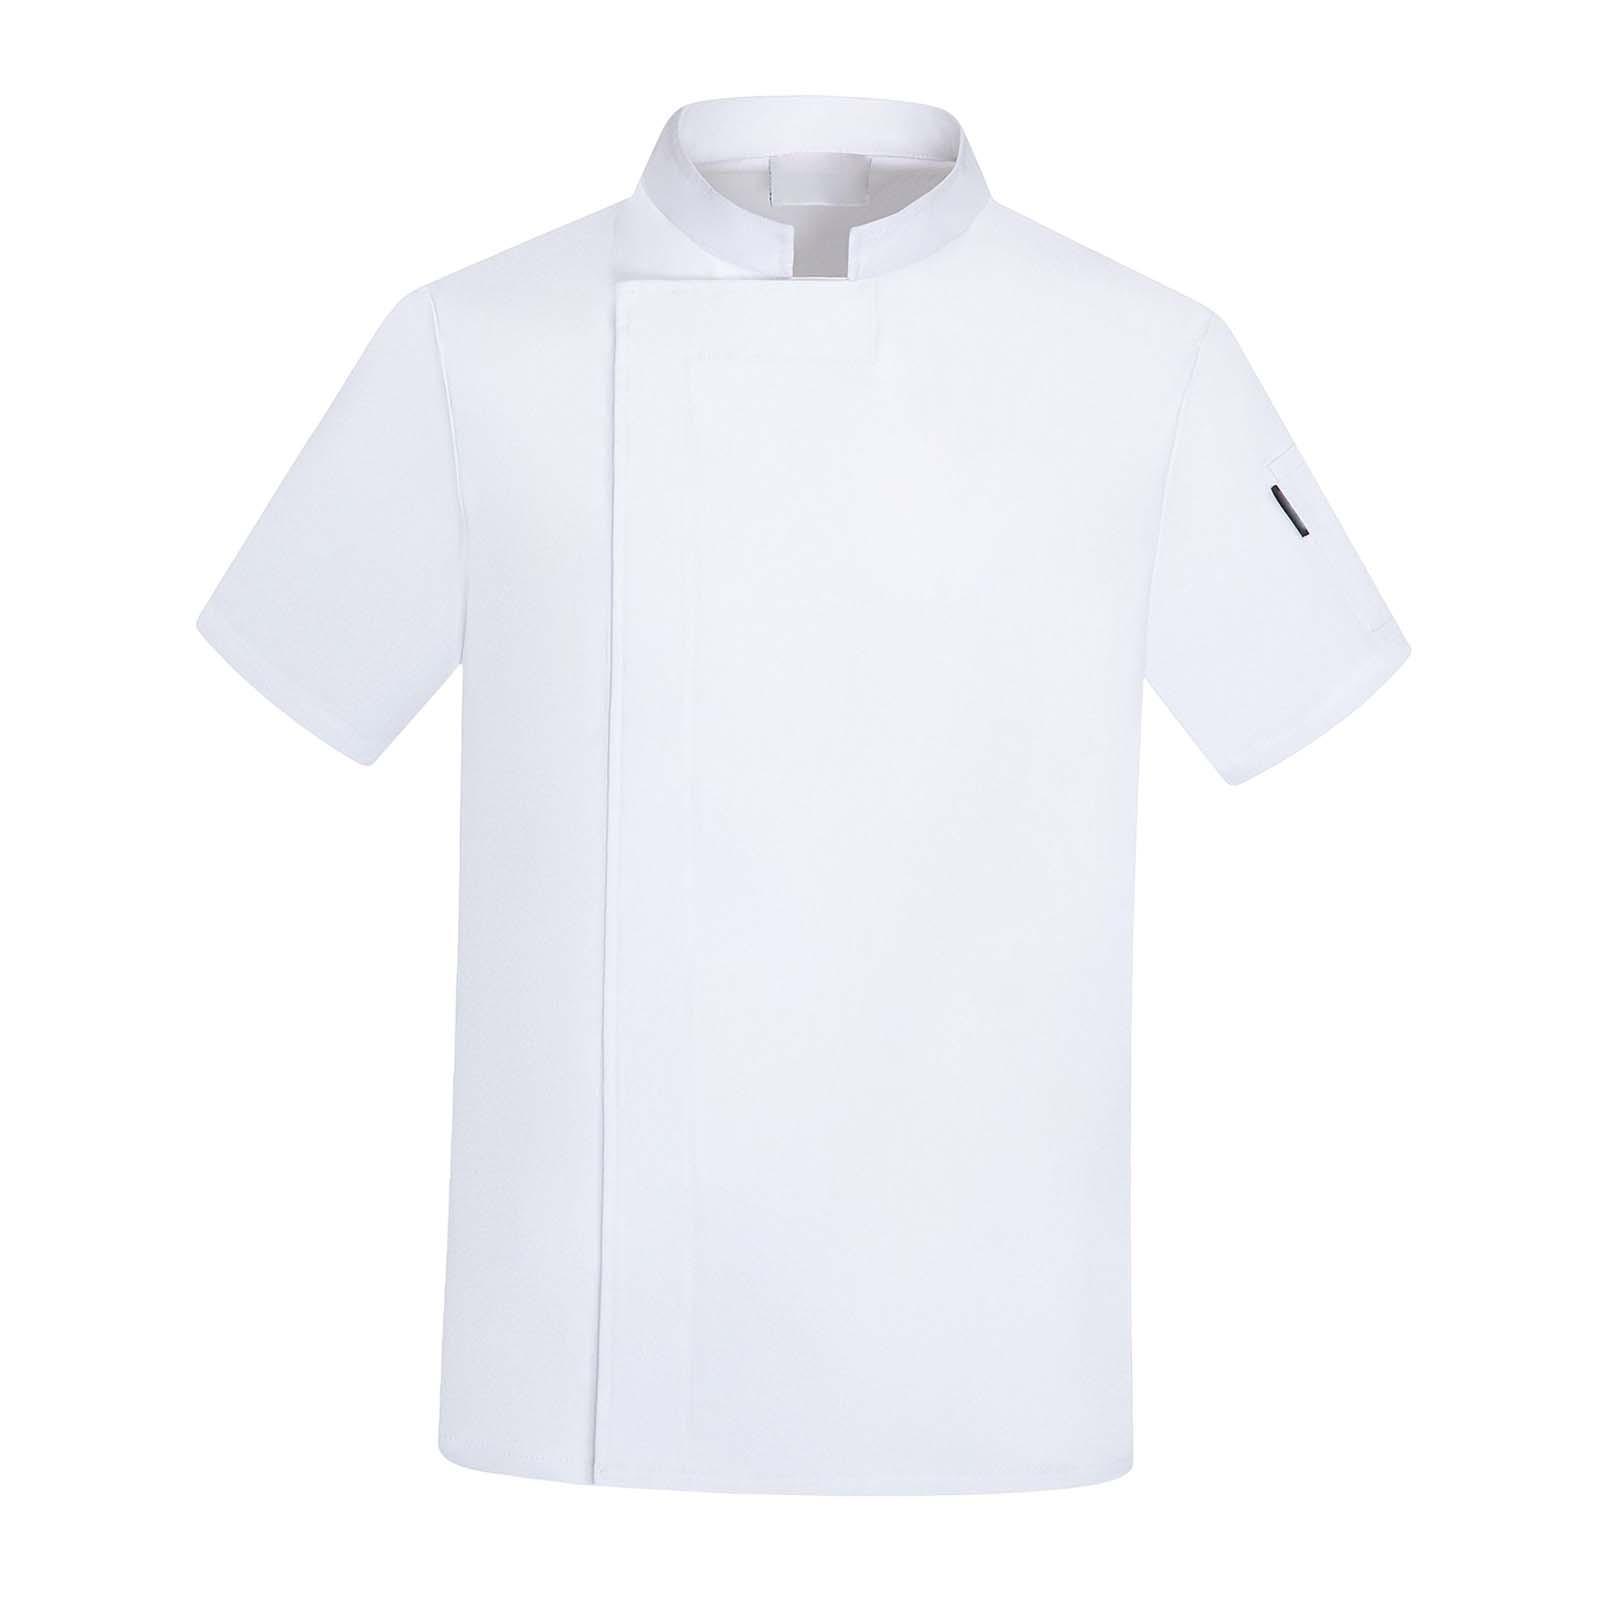 Chef Coat Jacket with Pocket Short Sleeve Shirt Breathable Waiter Apparel